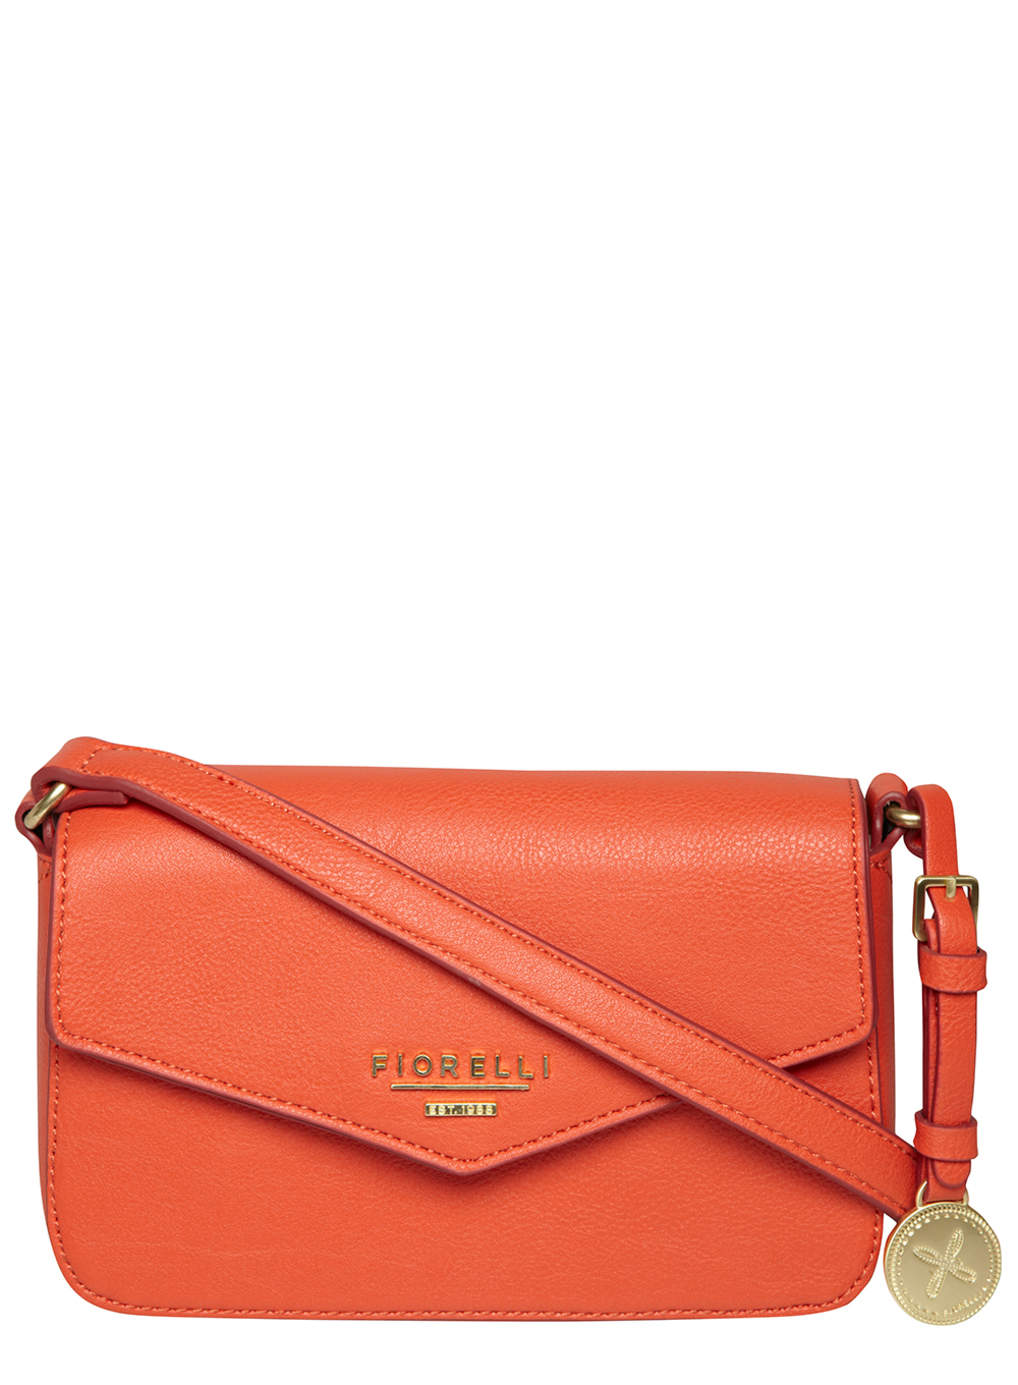 Dorothy Perkins Fiorelli Orange crossbody bag 18342040